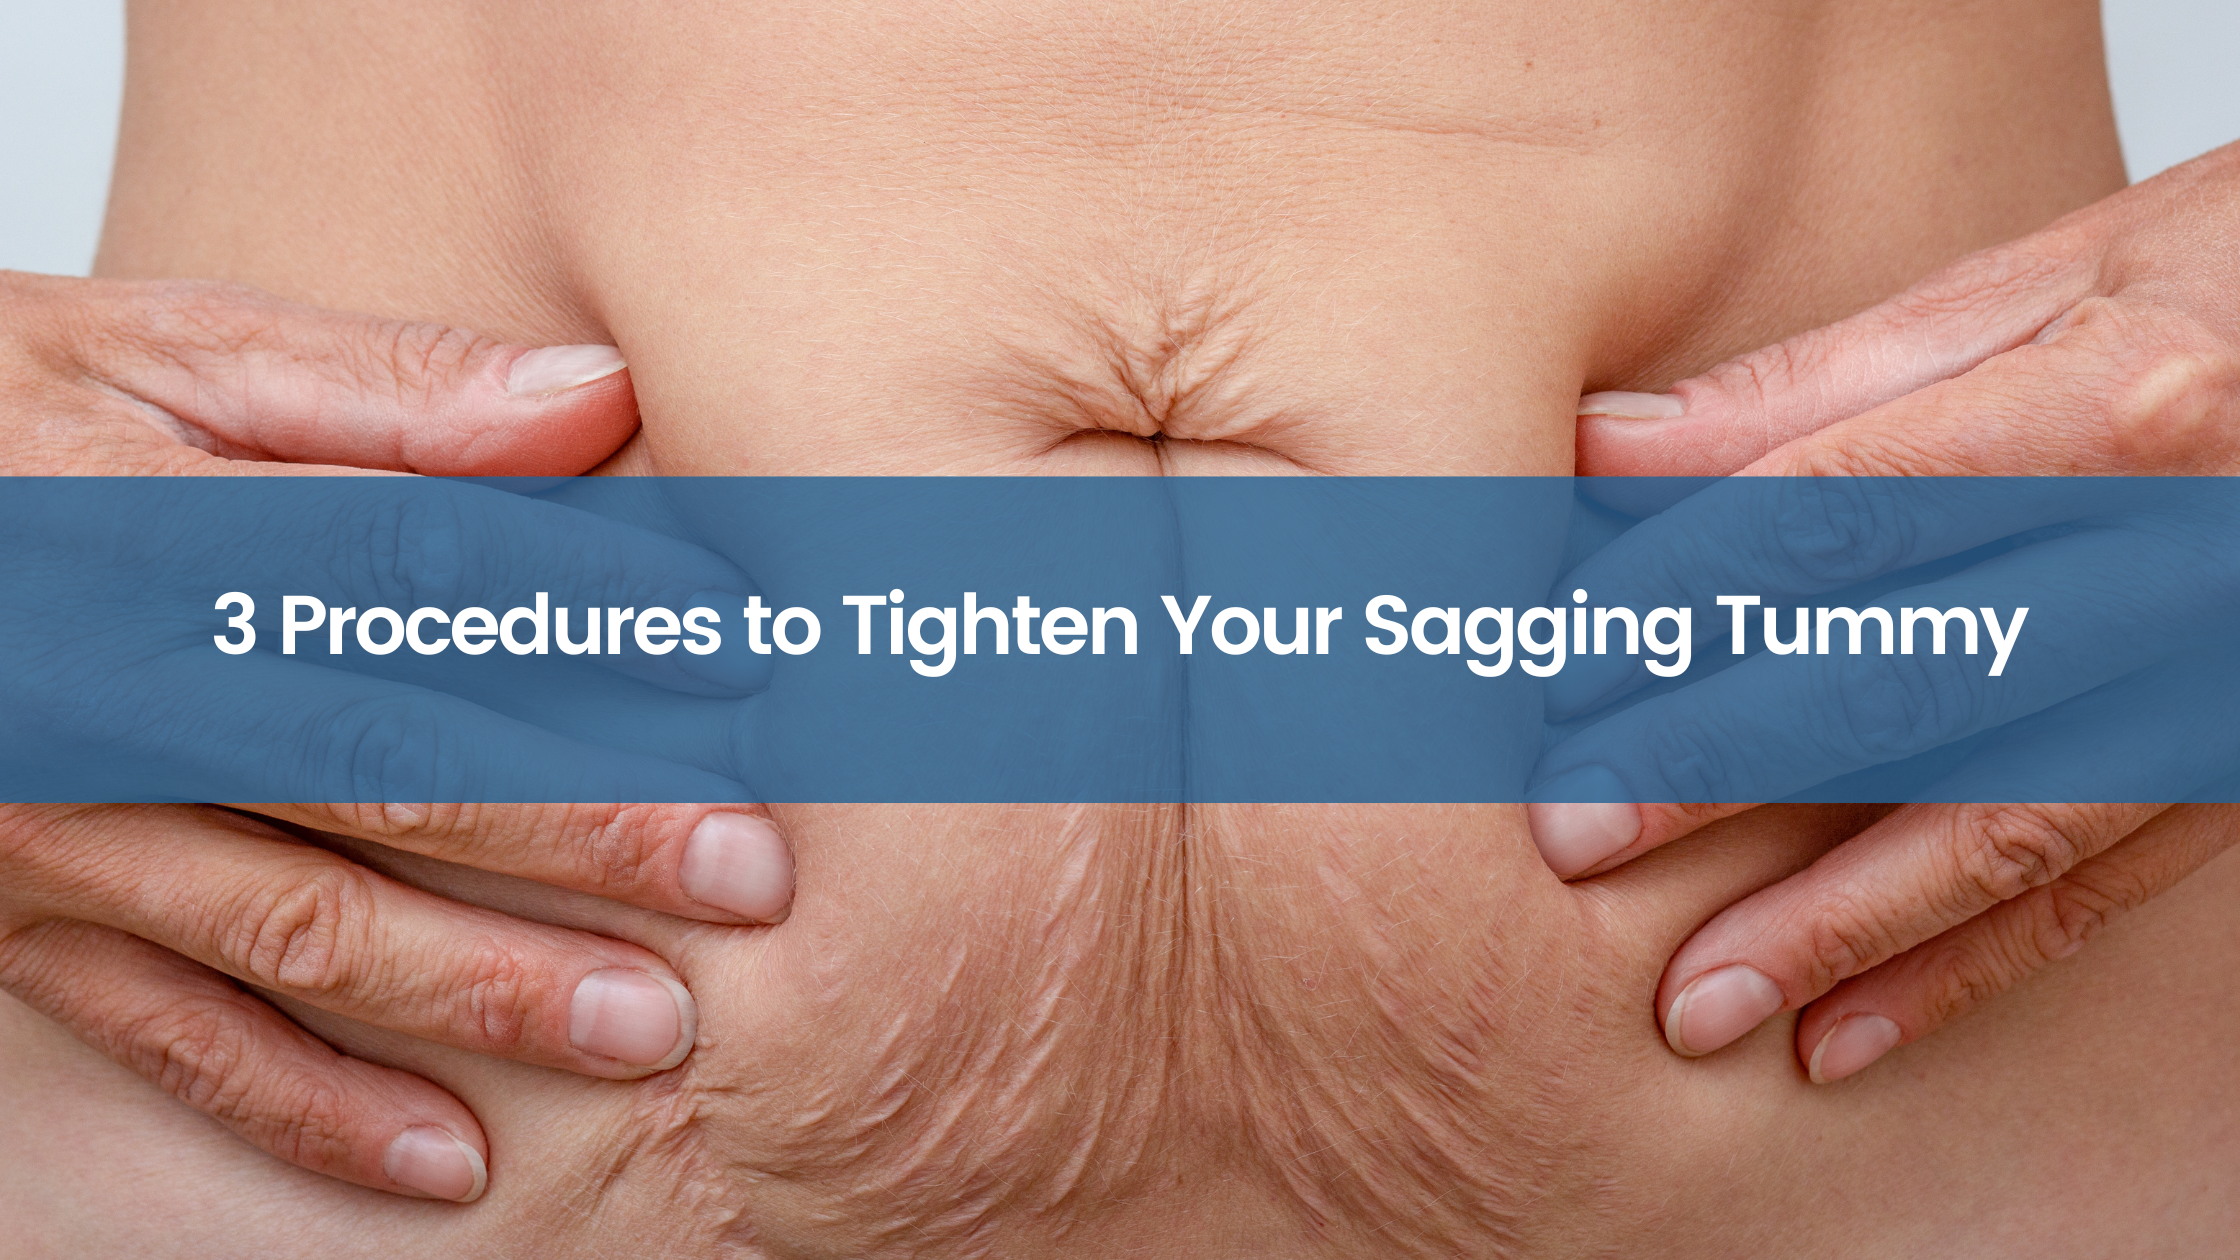 3 Procedures to Tighten Your Sagging Tummy